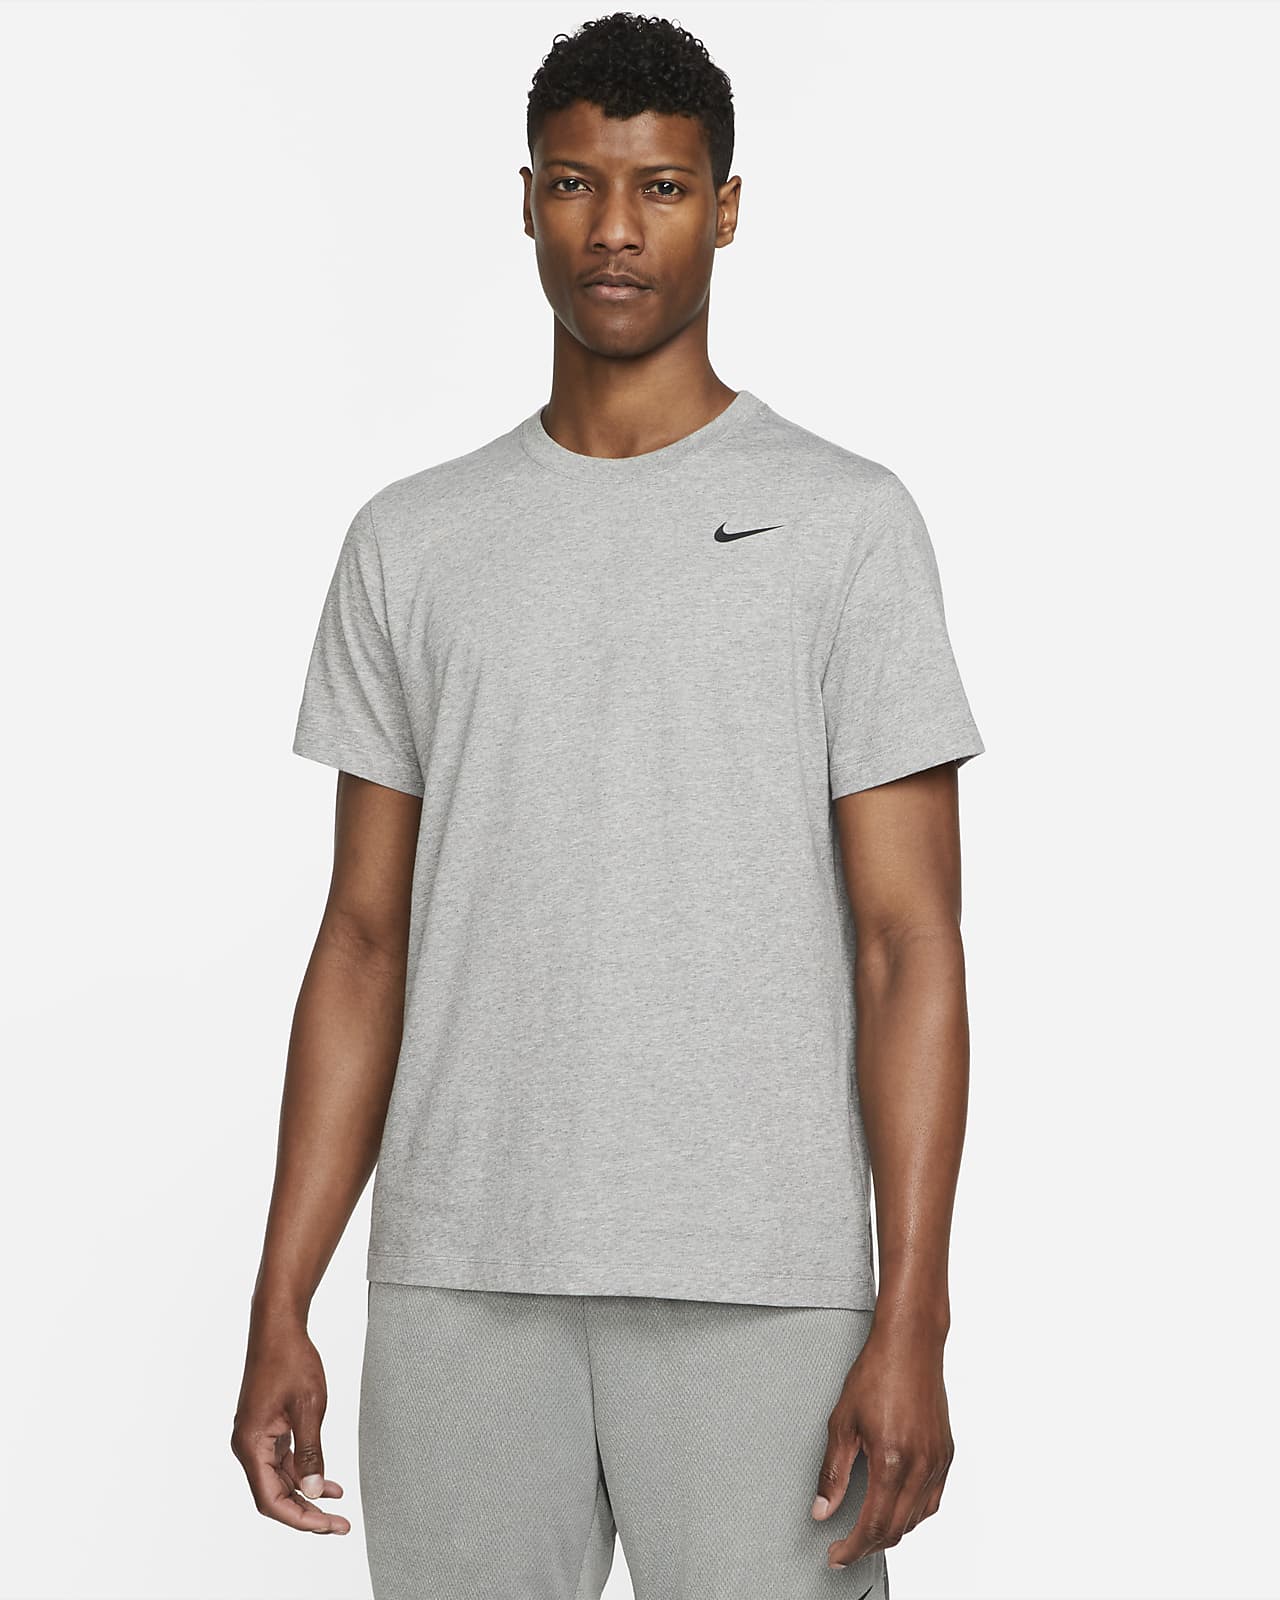 Tee-shirt de Nike pour homme. Nike FR